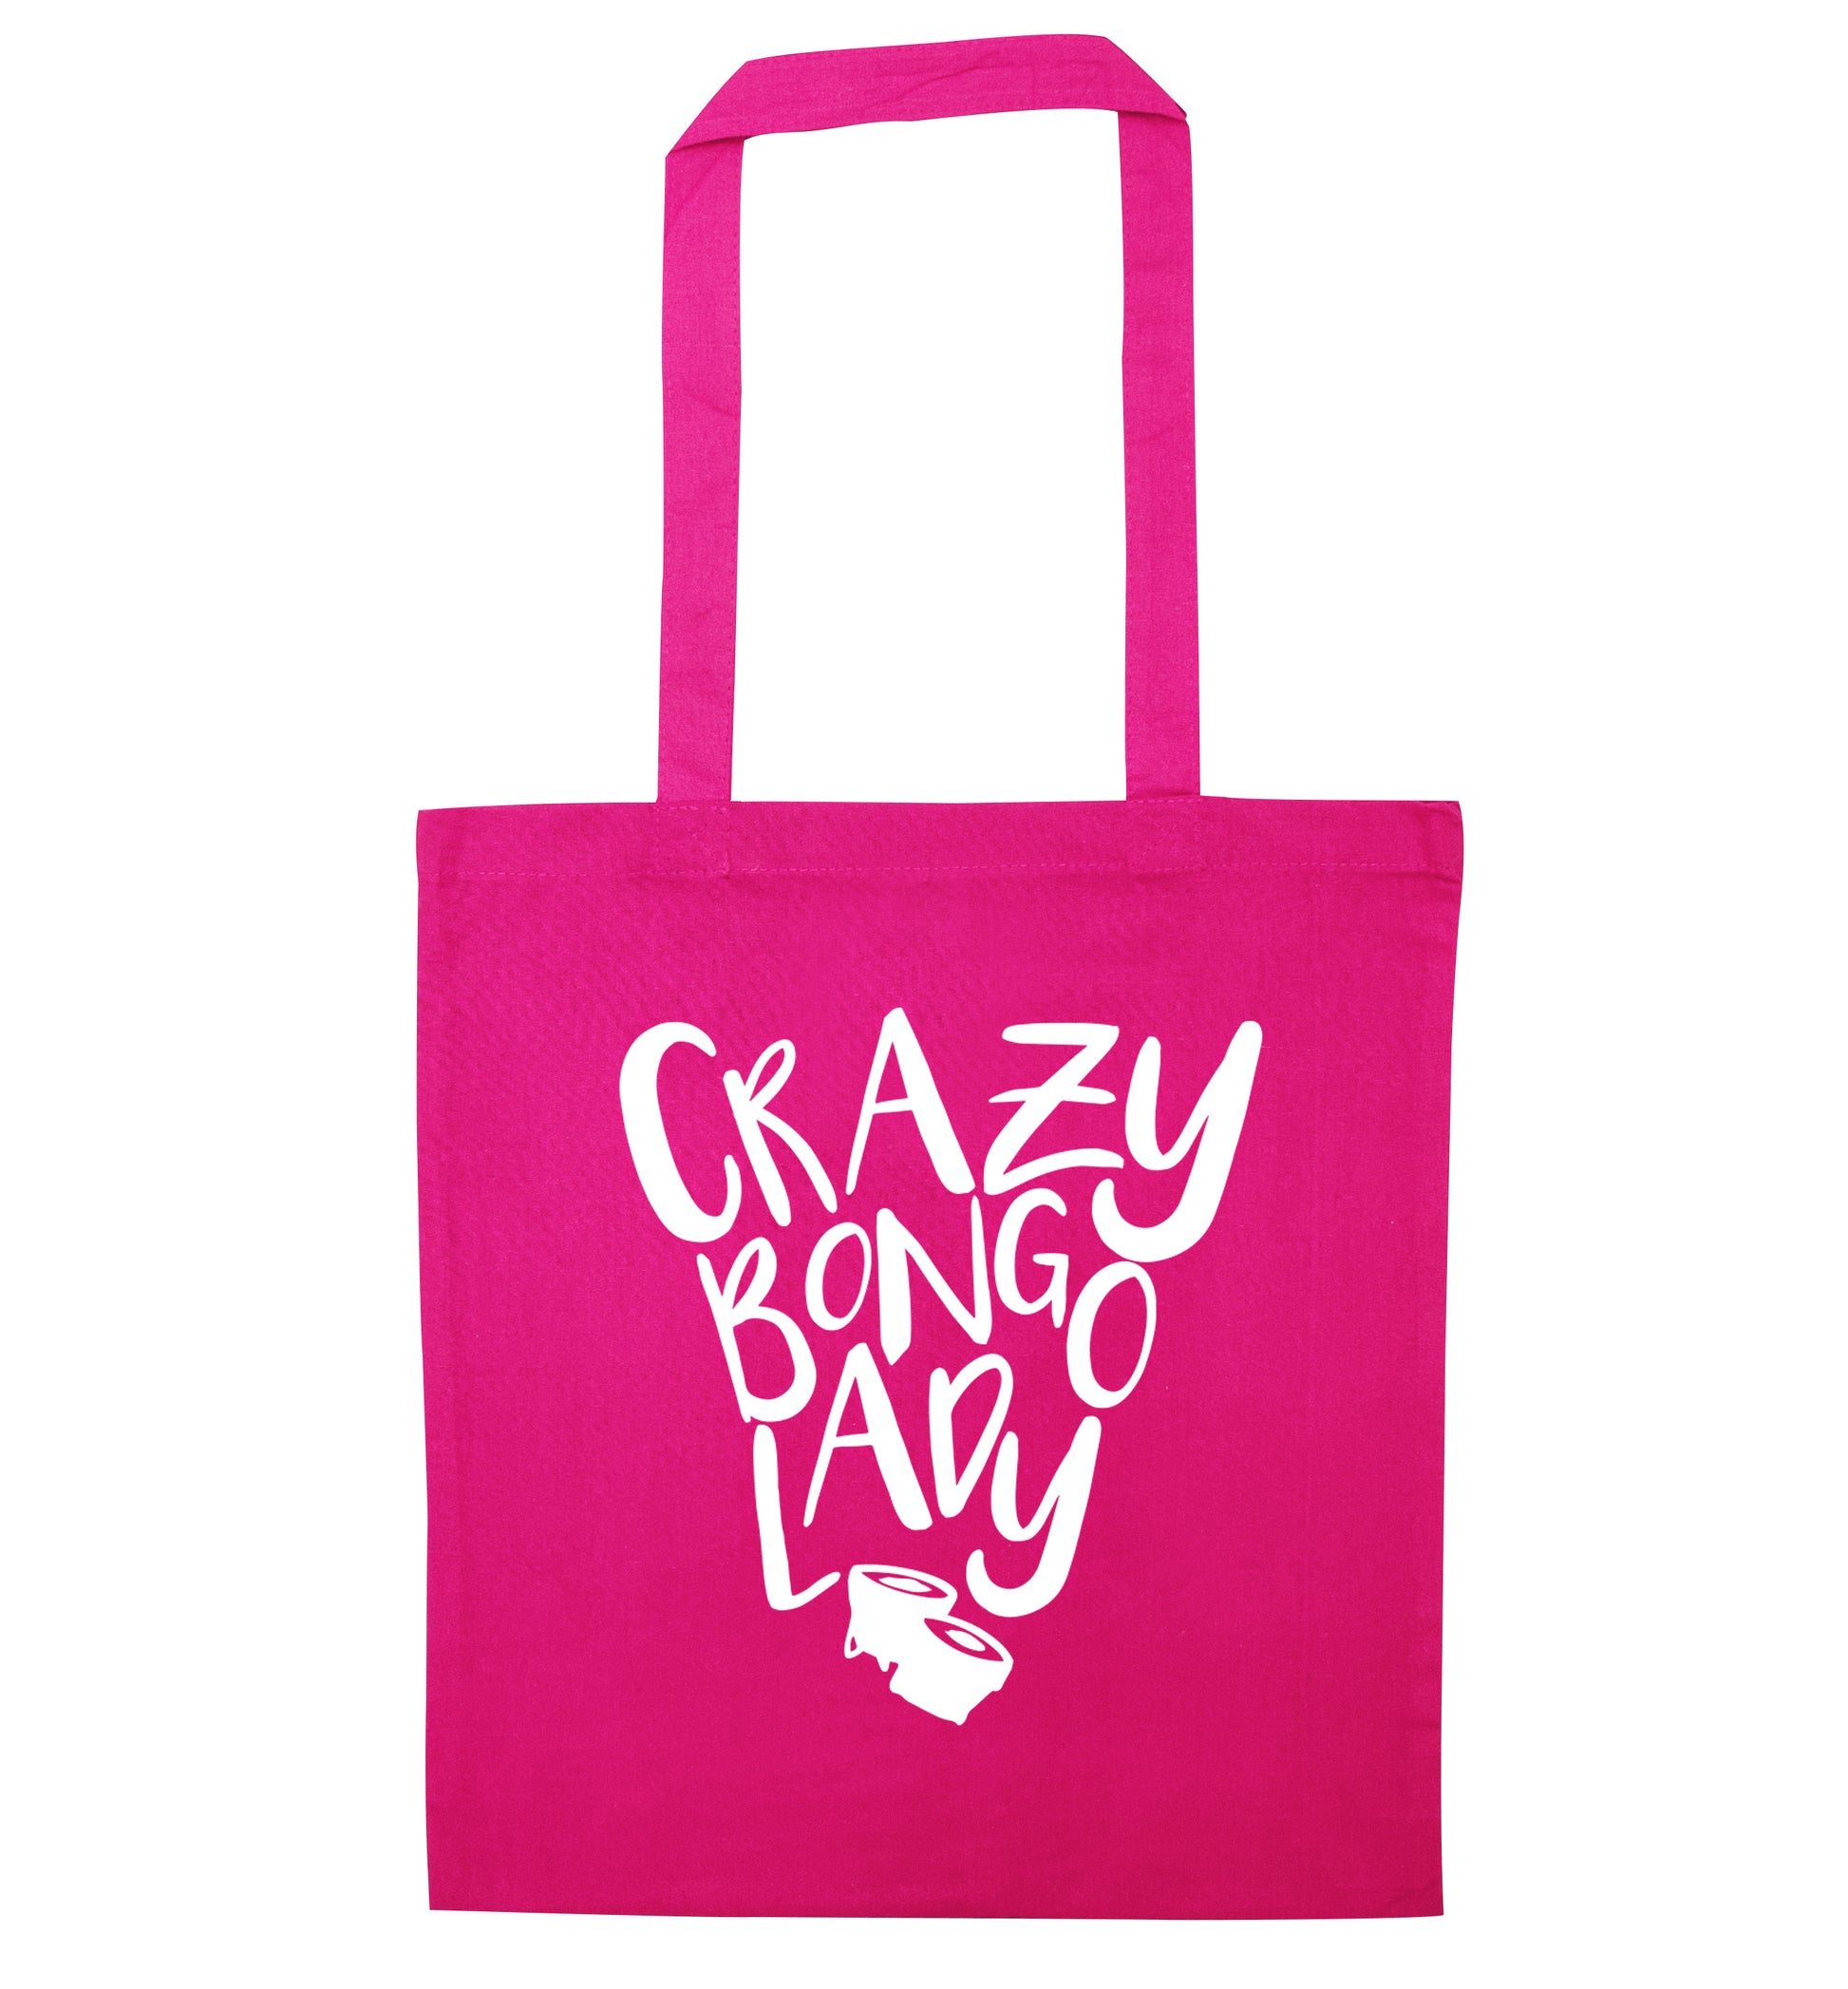 Crazy bongo lady pink tote bag